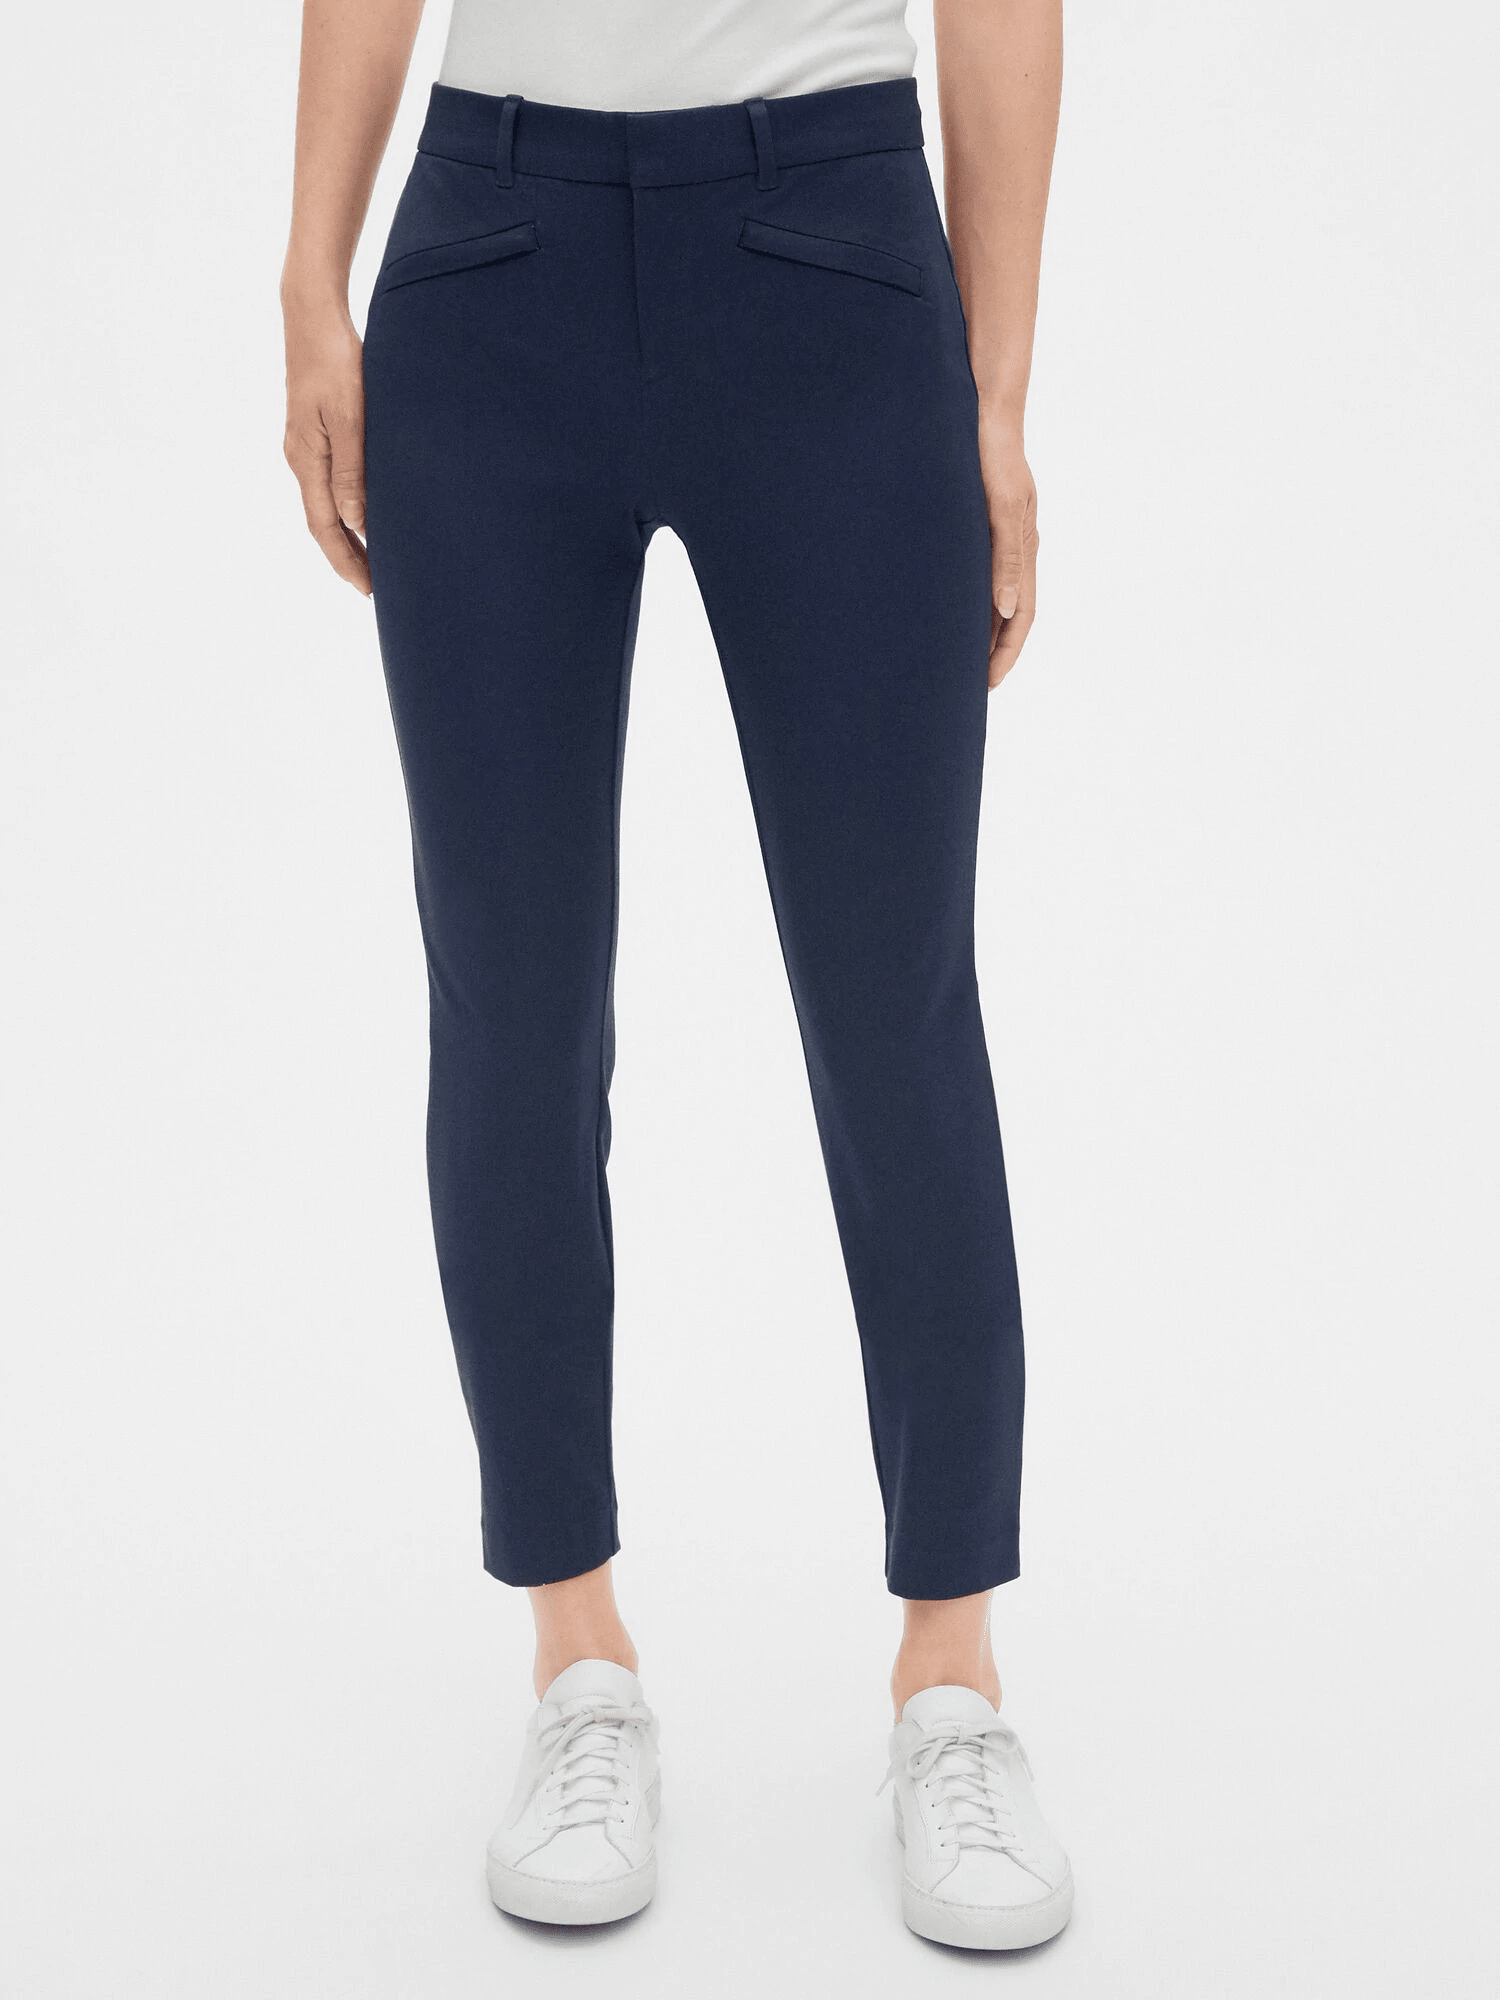 Gap Skinny Ankle Pants | Dippla.Shop